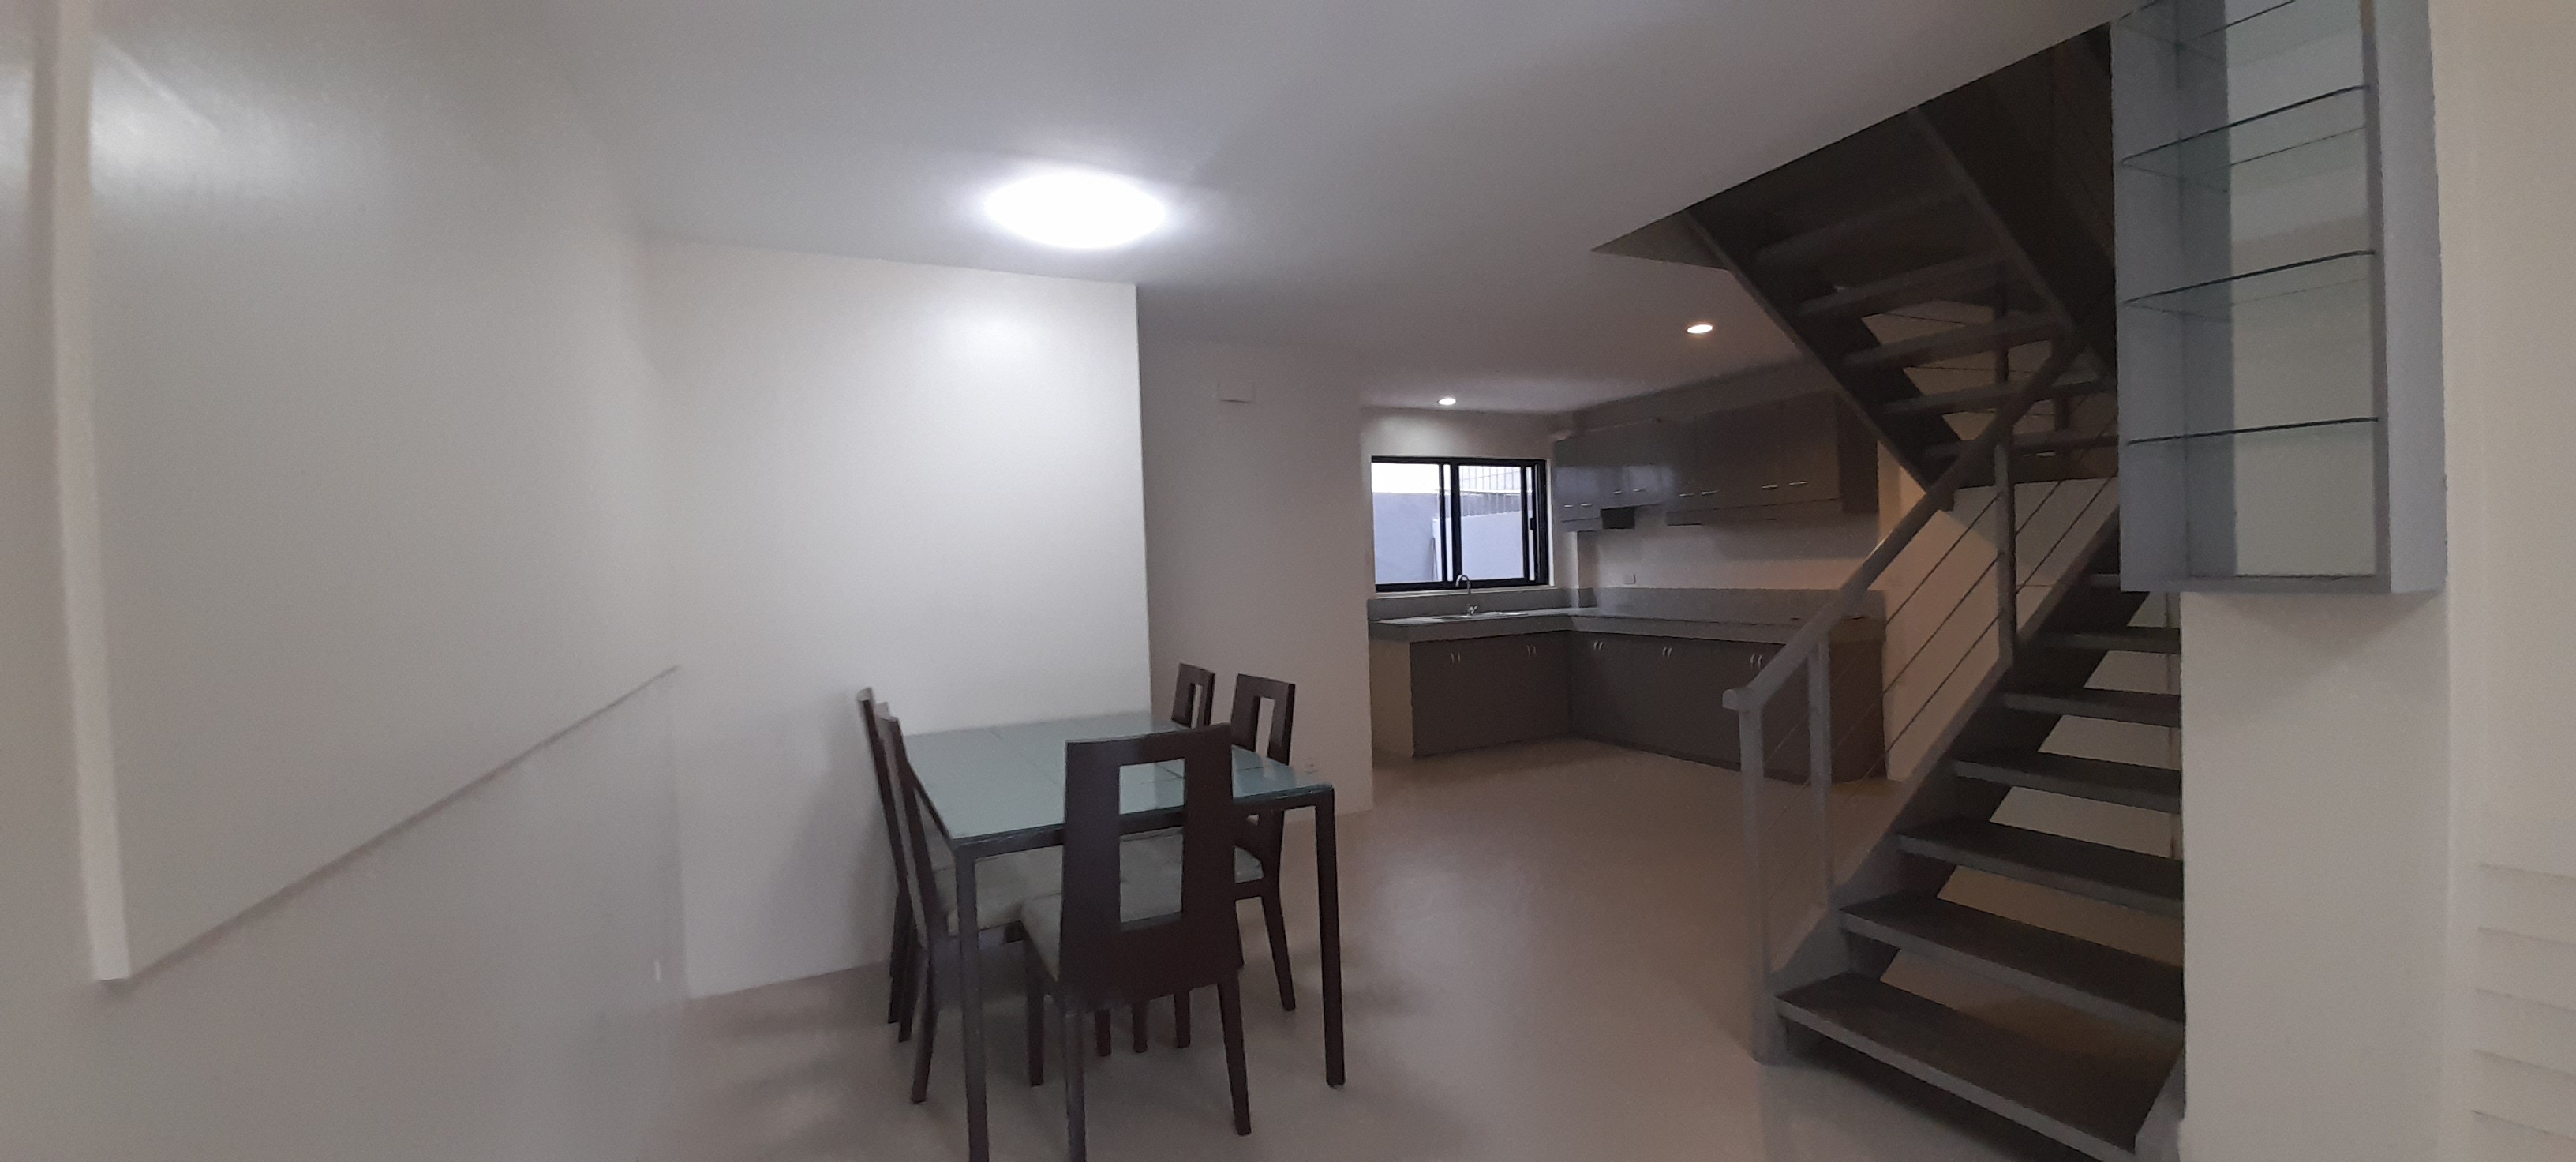 3-bedroom-unfurnished-apartment-in-guadalupe-cebu-city-cebu